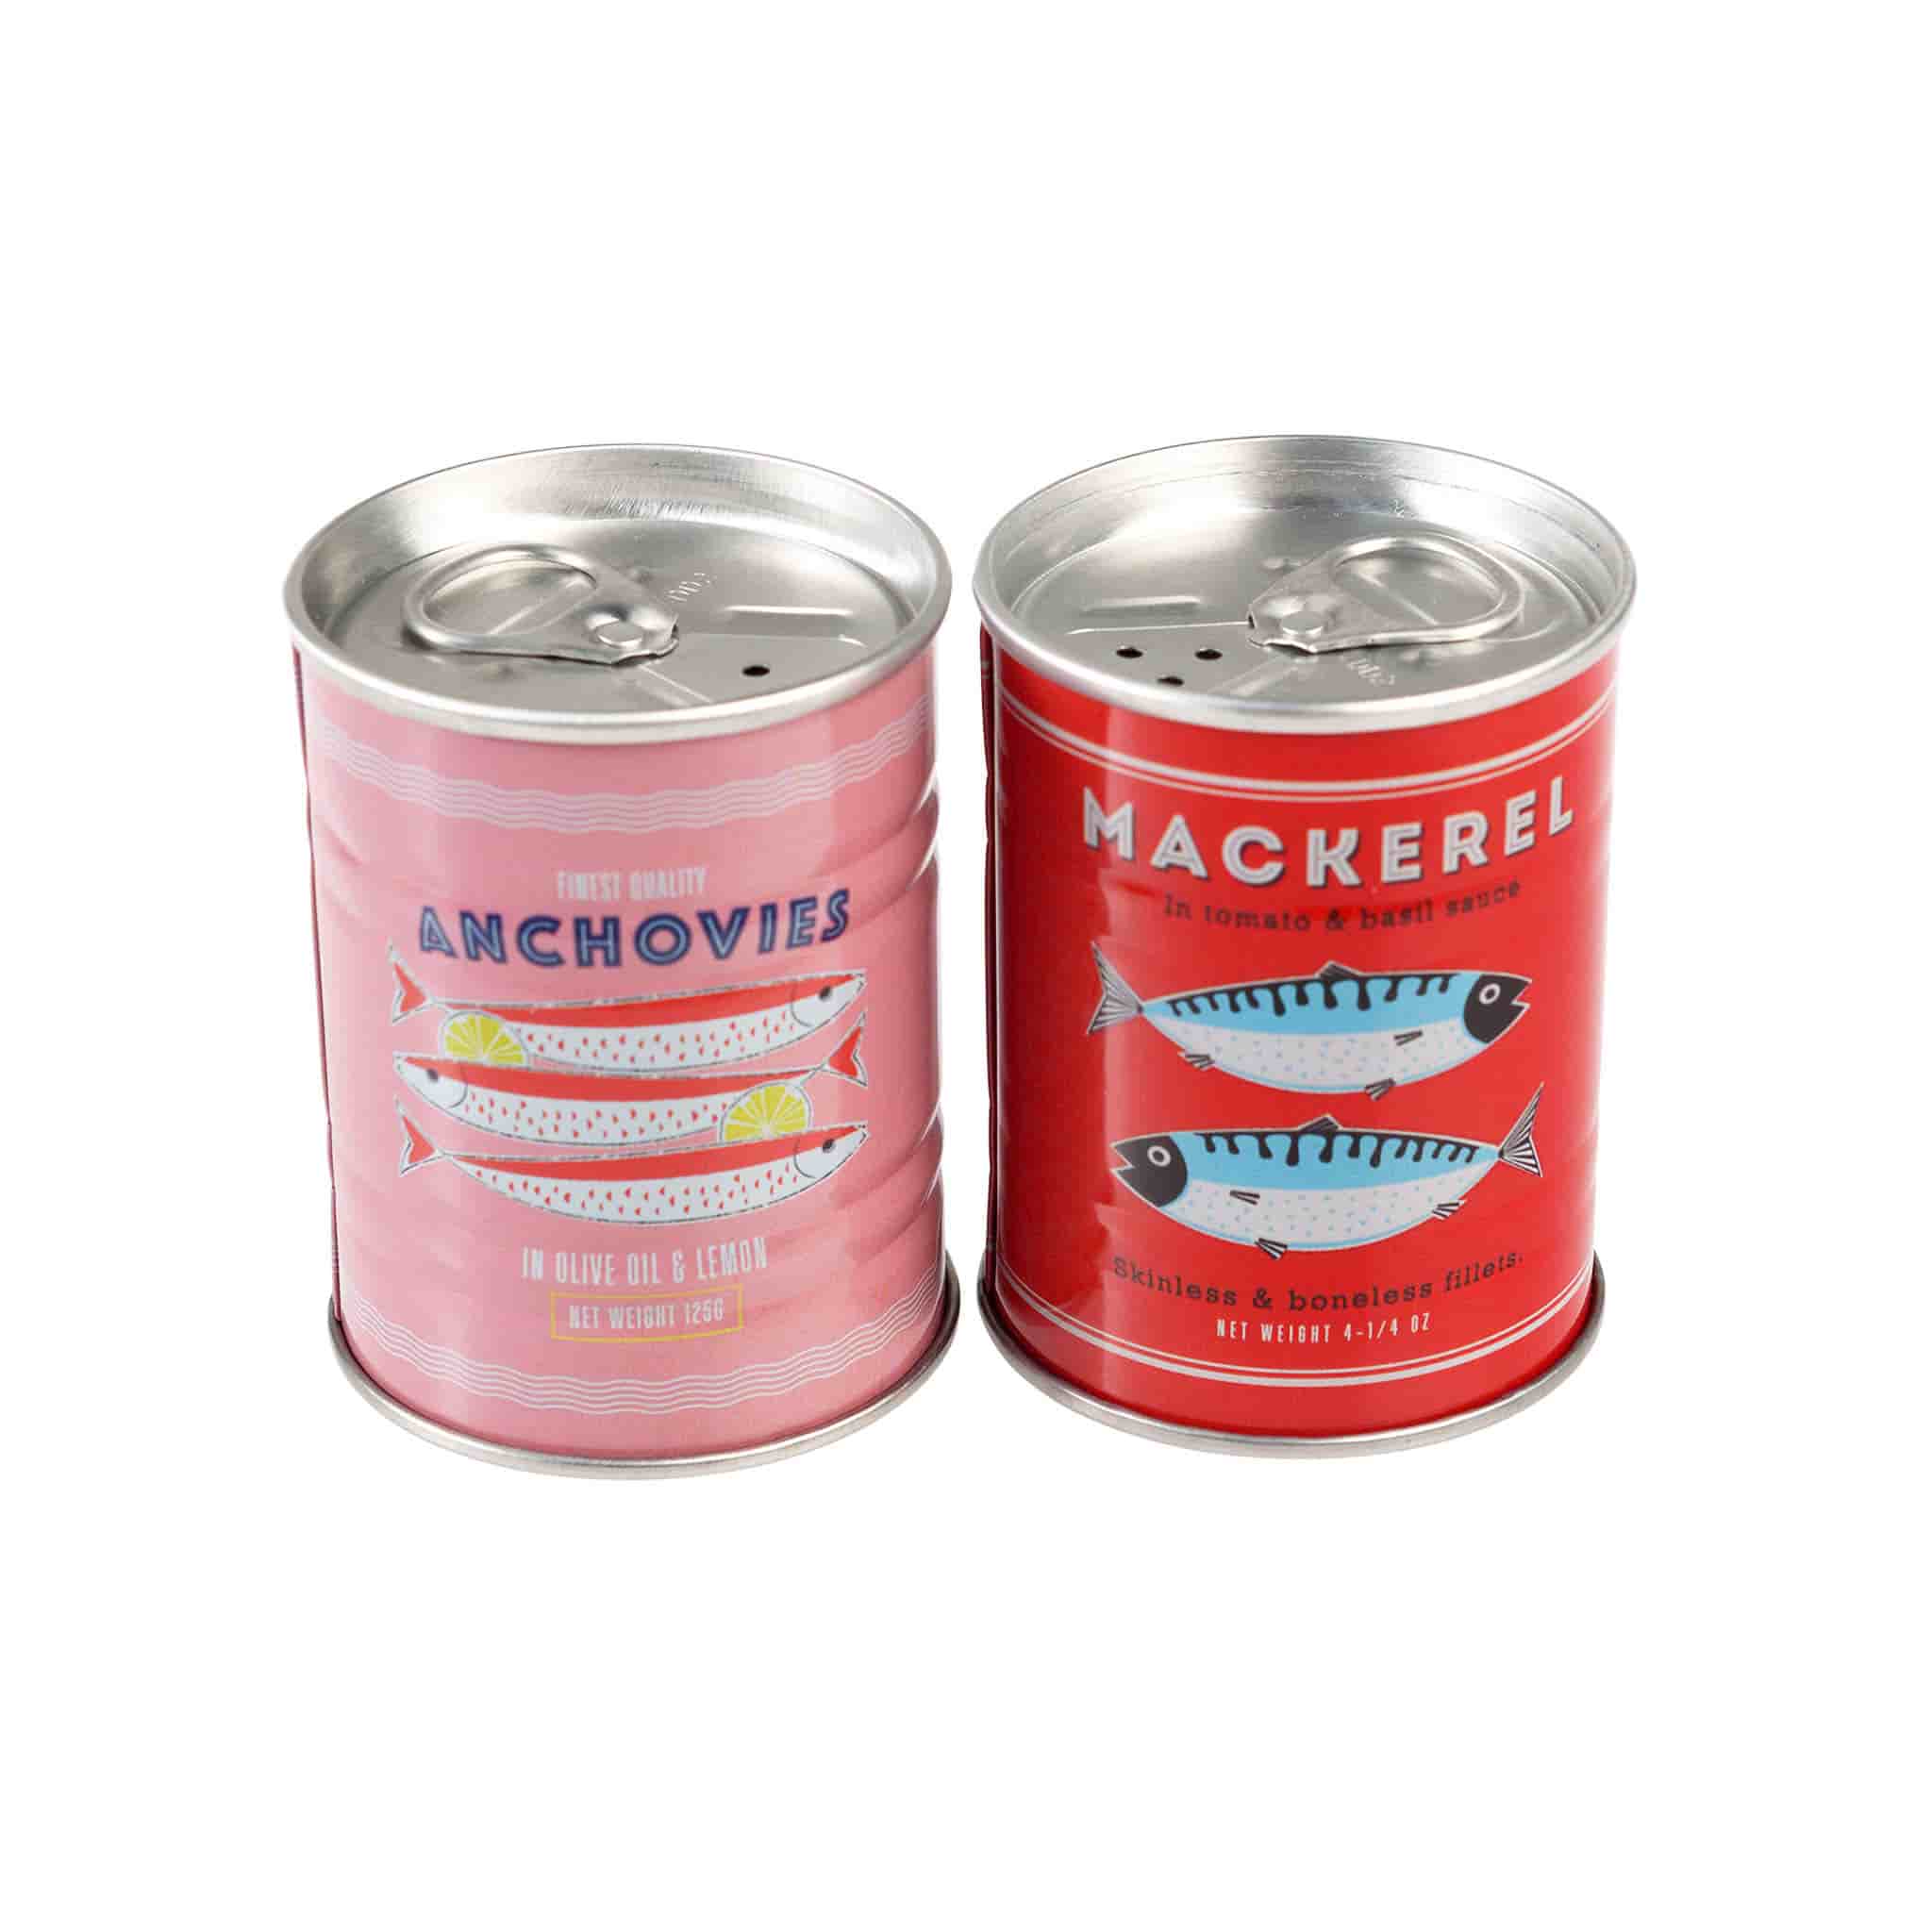 Anchovies & Mackerel Salt & Pepper Shaker Set